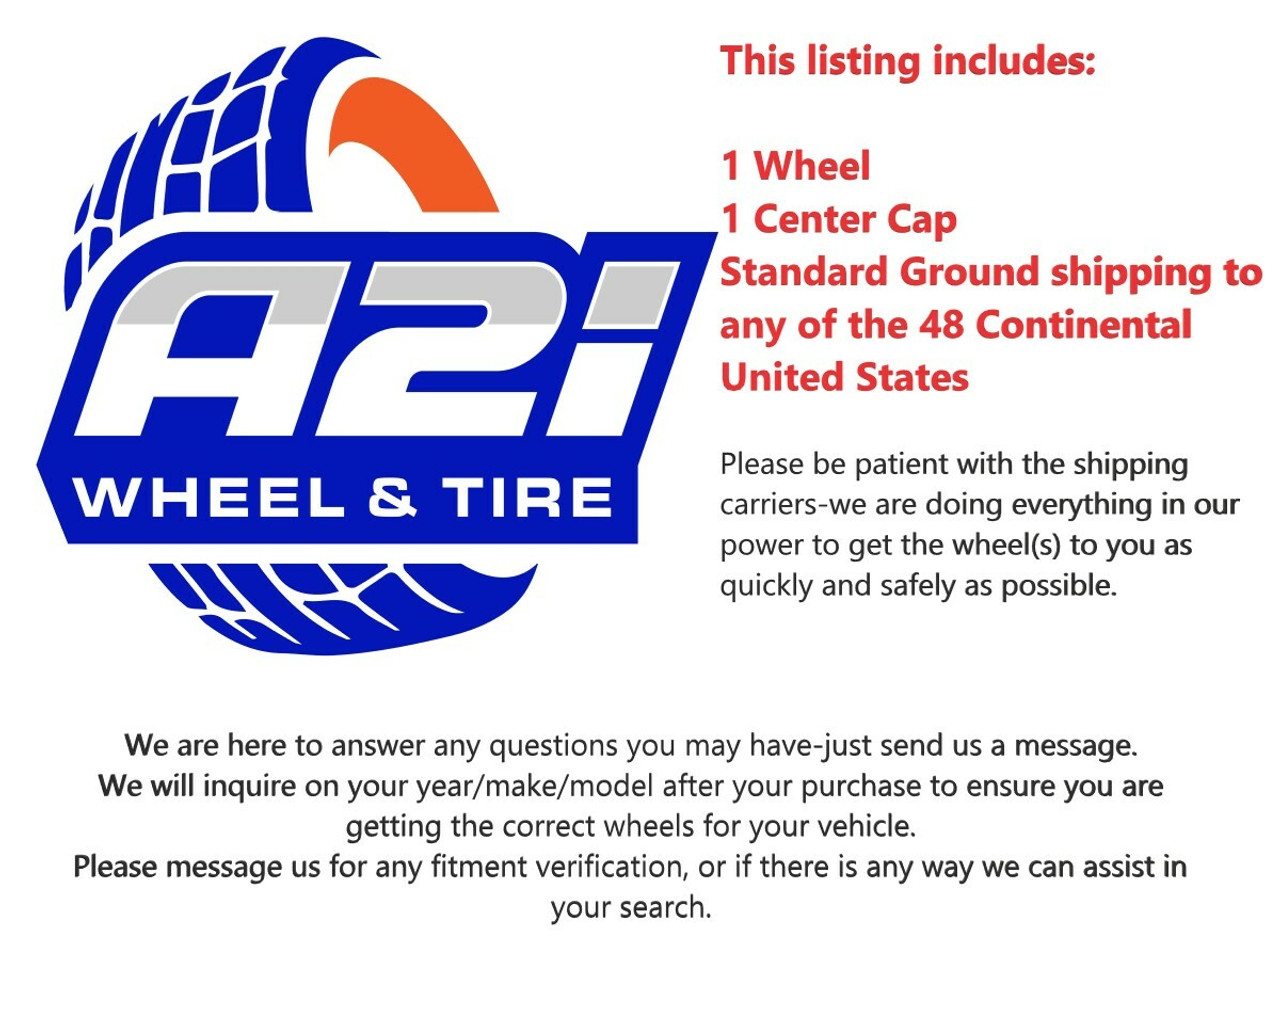 ATX AO405 Trex 22.5x8.25 10x11.25 Gloss Black Milled - Rear Wheel 22.5" -168mm